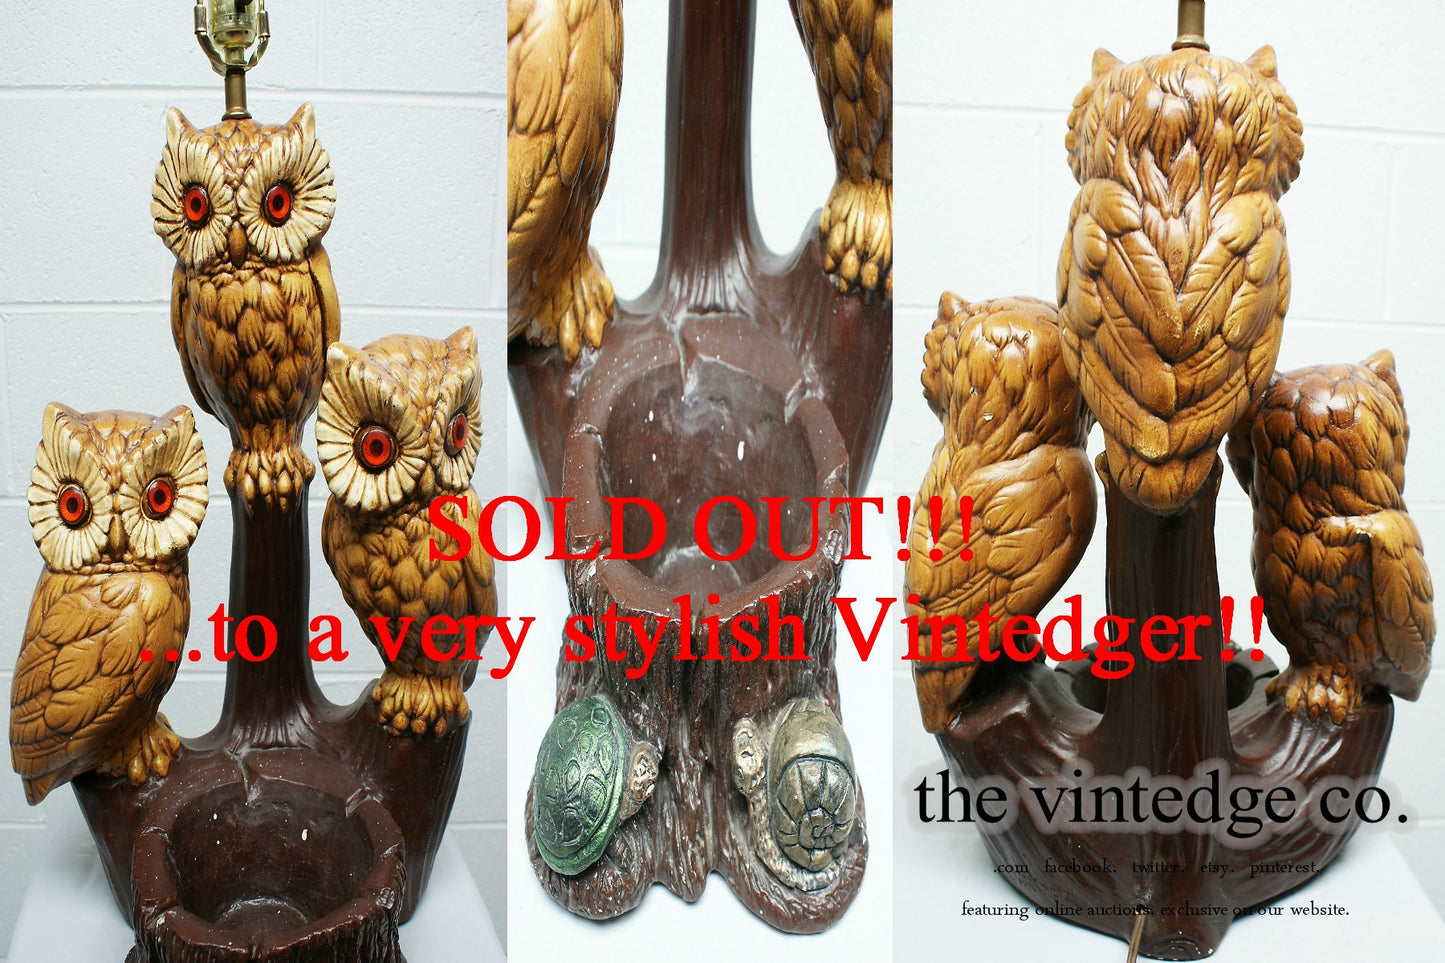 SOLD - Vintage Owl Lamp The Vintedge Co.